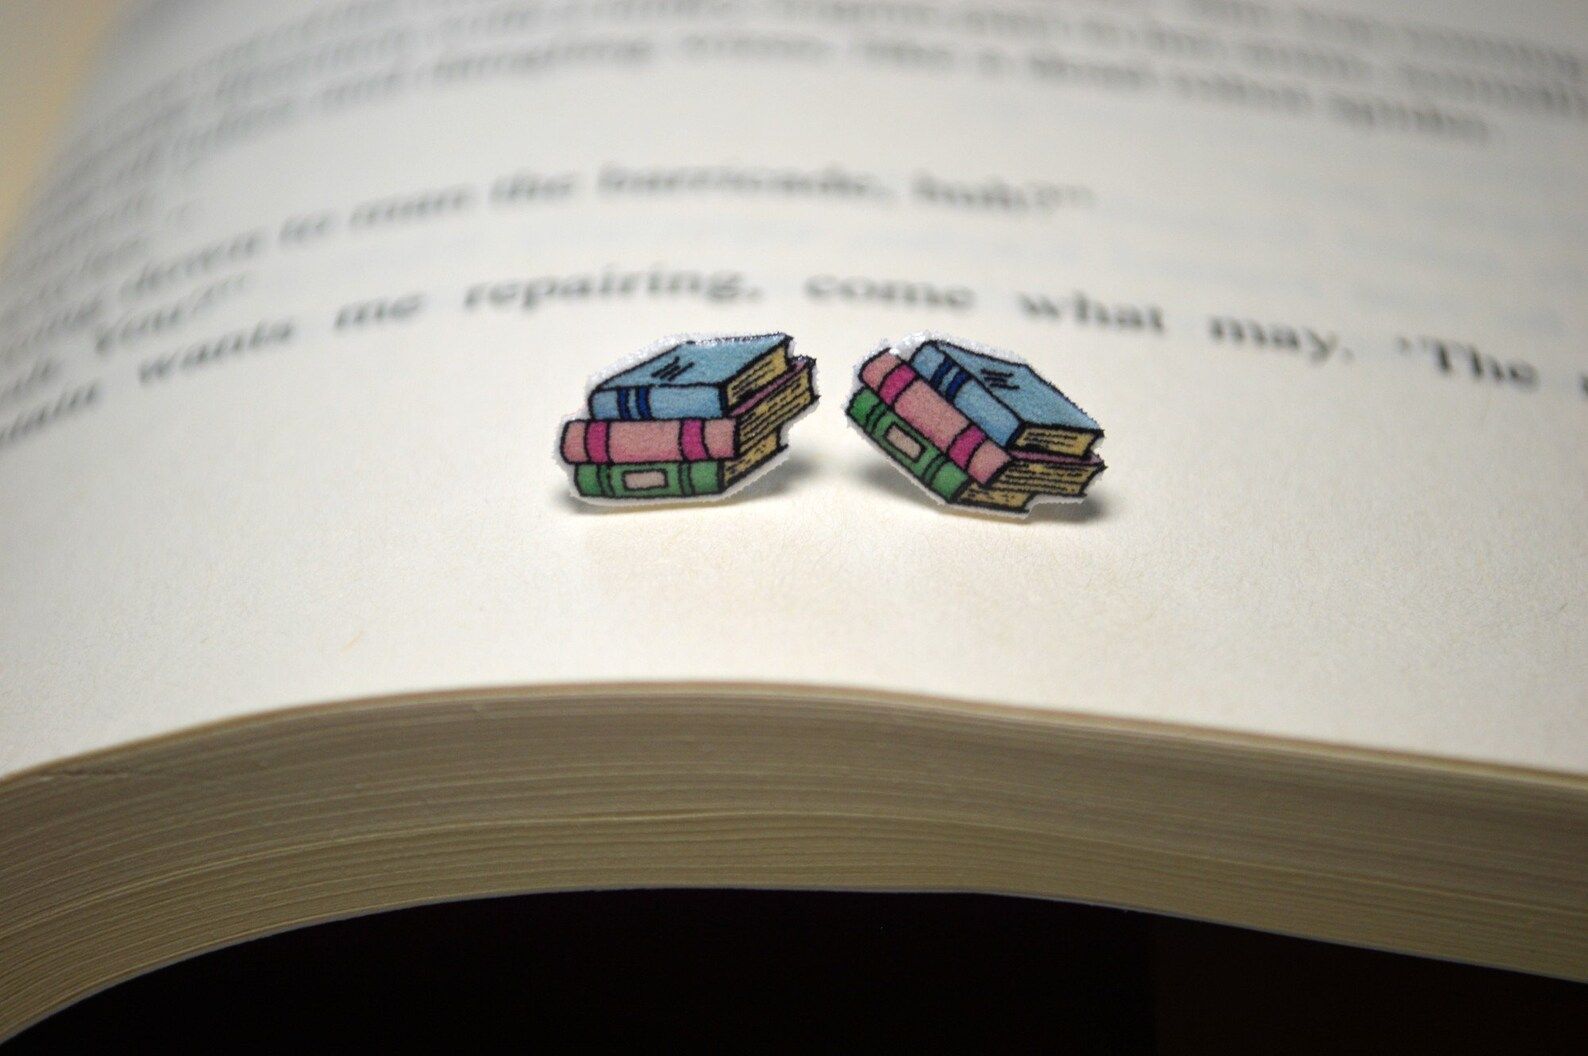 Book stack stud earrings on book